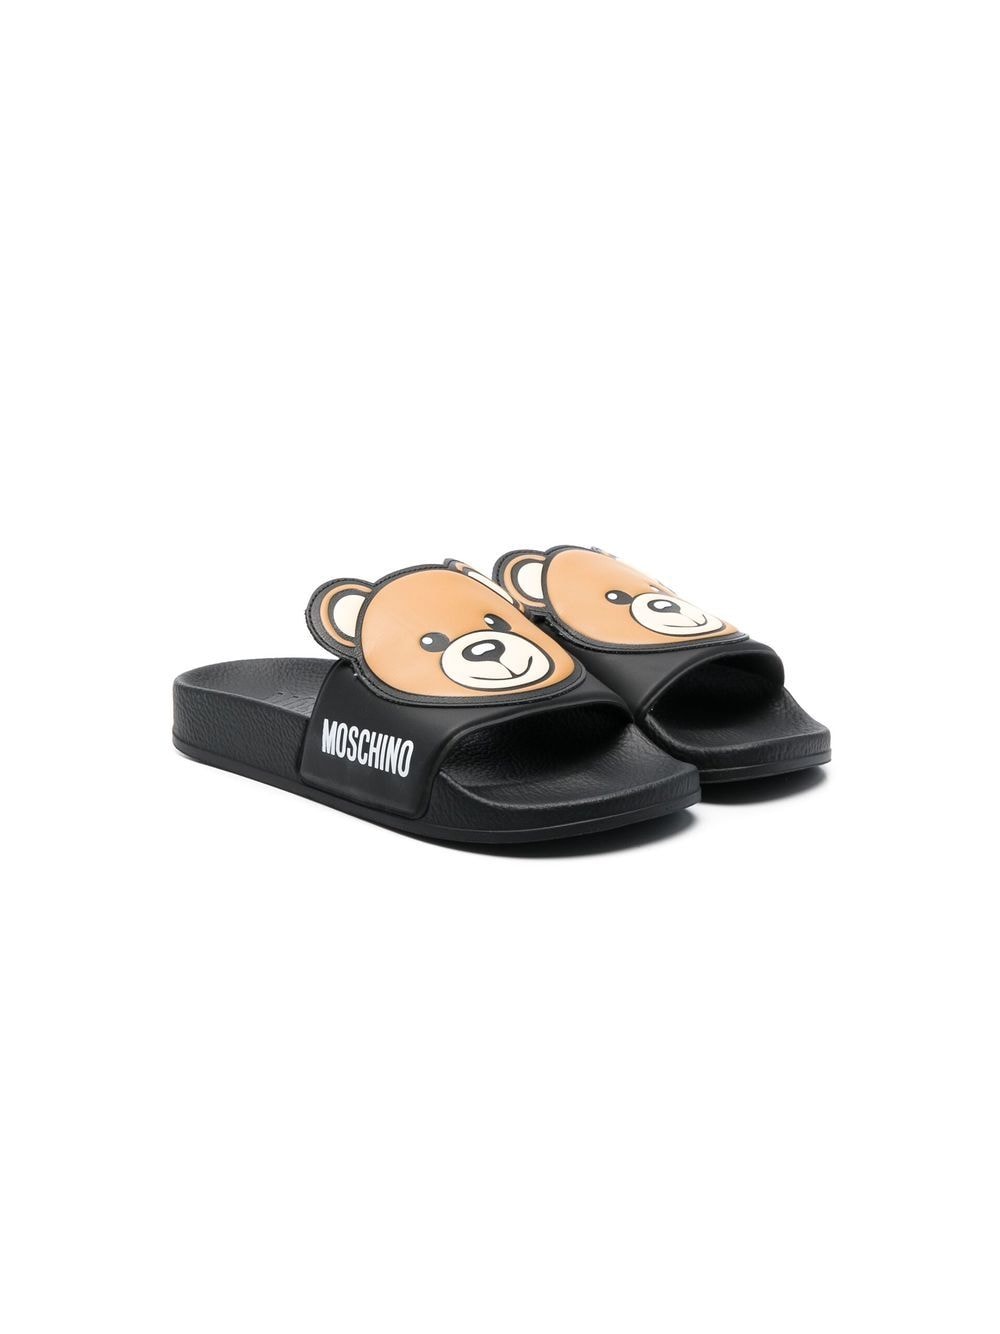 Moschino Kids' Open Toe Sandals In Black